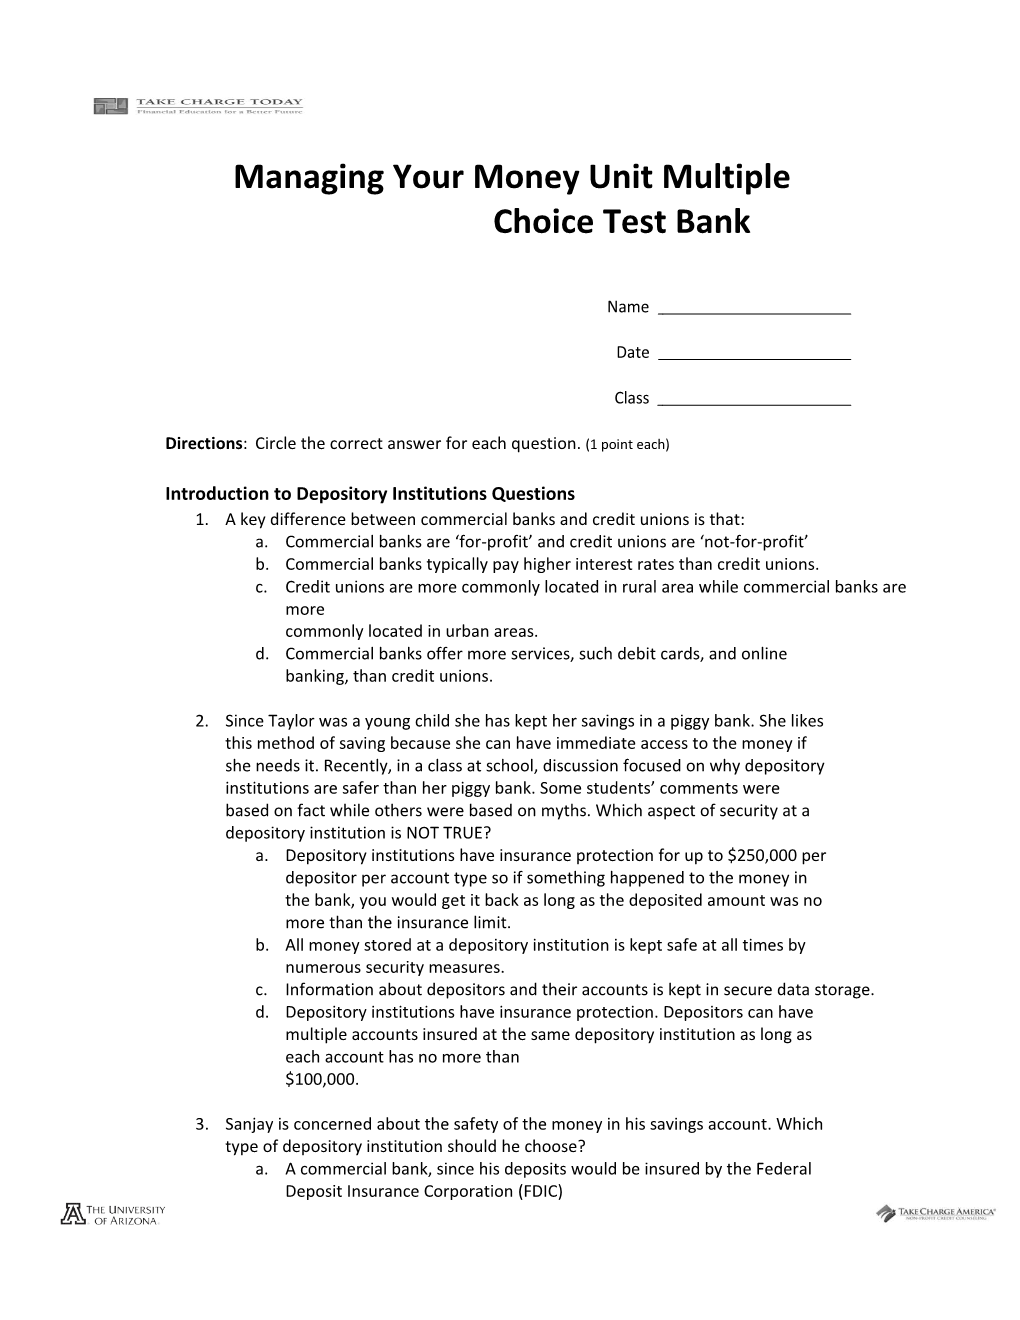 Managing Your Money Unit Multiple Choice Test Bank 2.2.0.M1